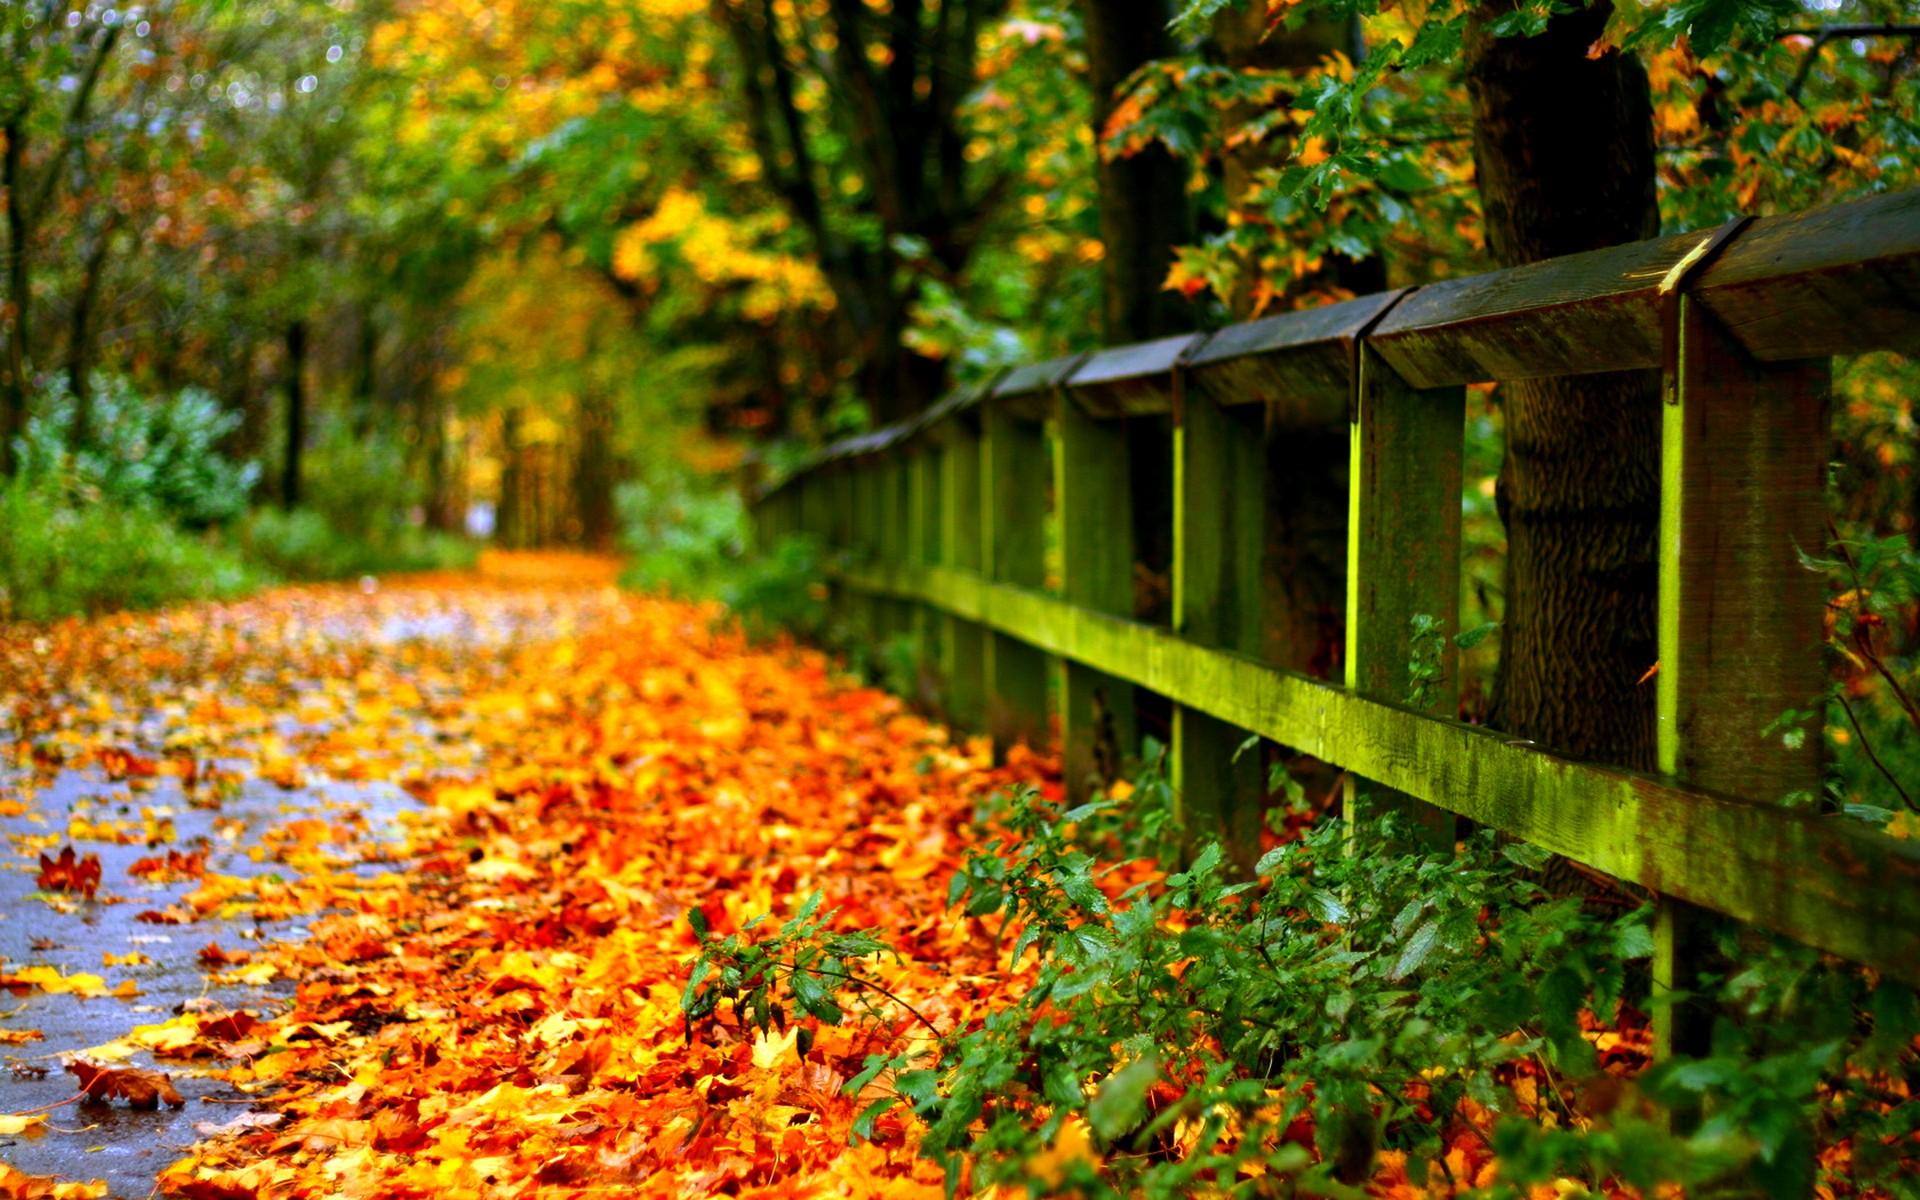 1366x768 Autumn Wood Road Leaves Foggy  Landscape Landscape photography  nature Autumn scenery